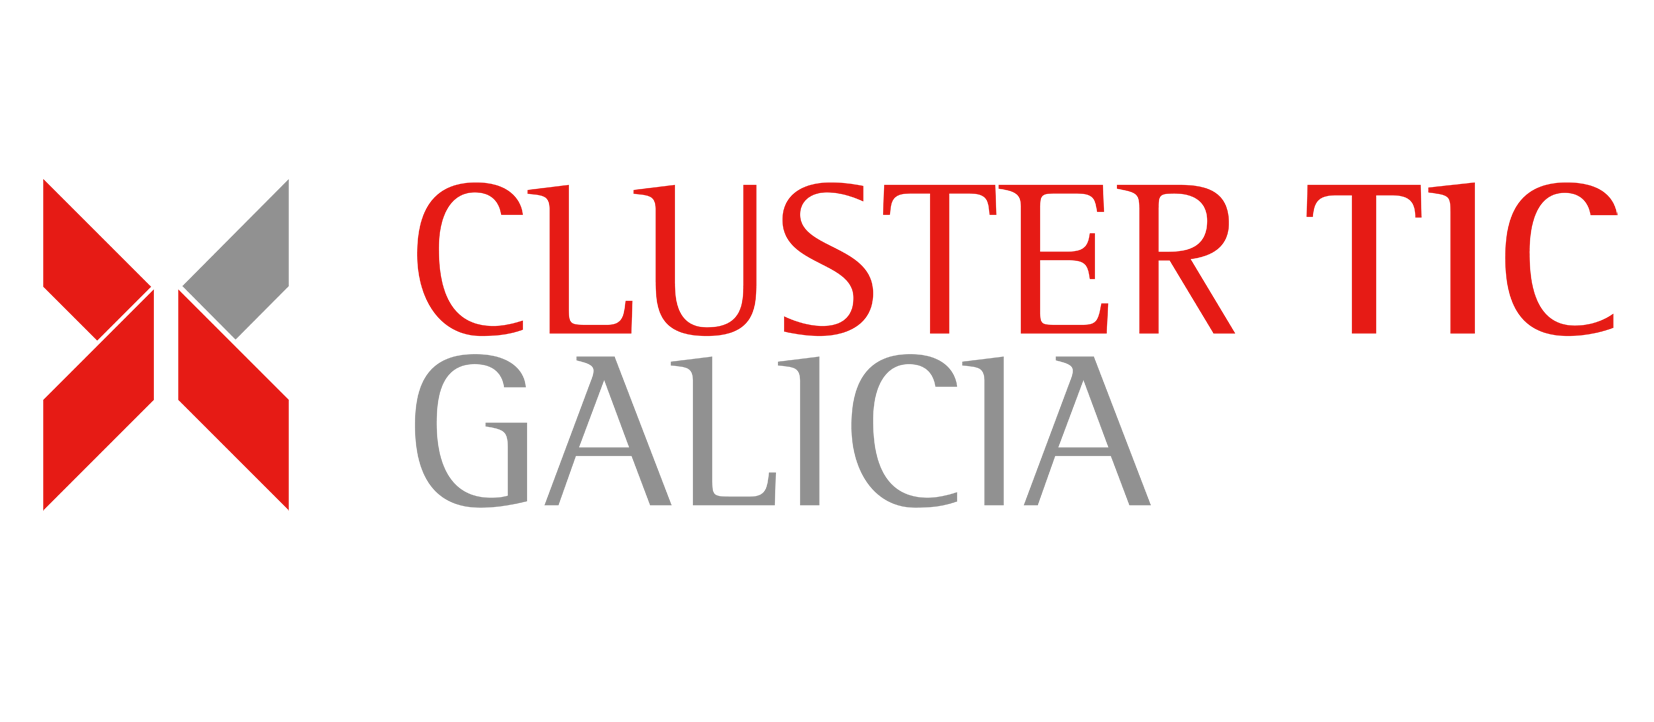 ClusterTIC Galicia